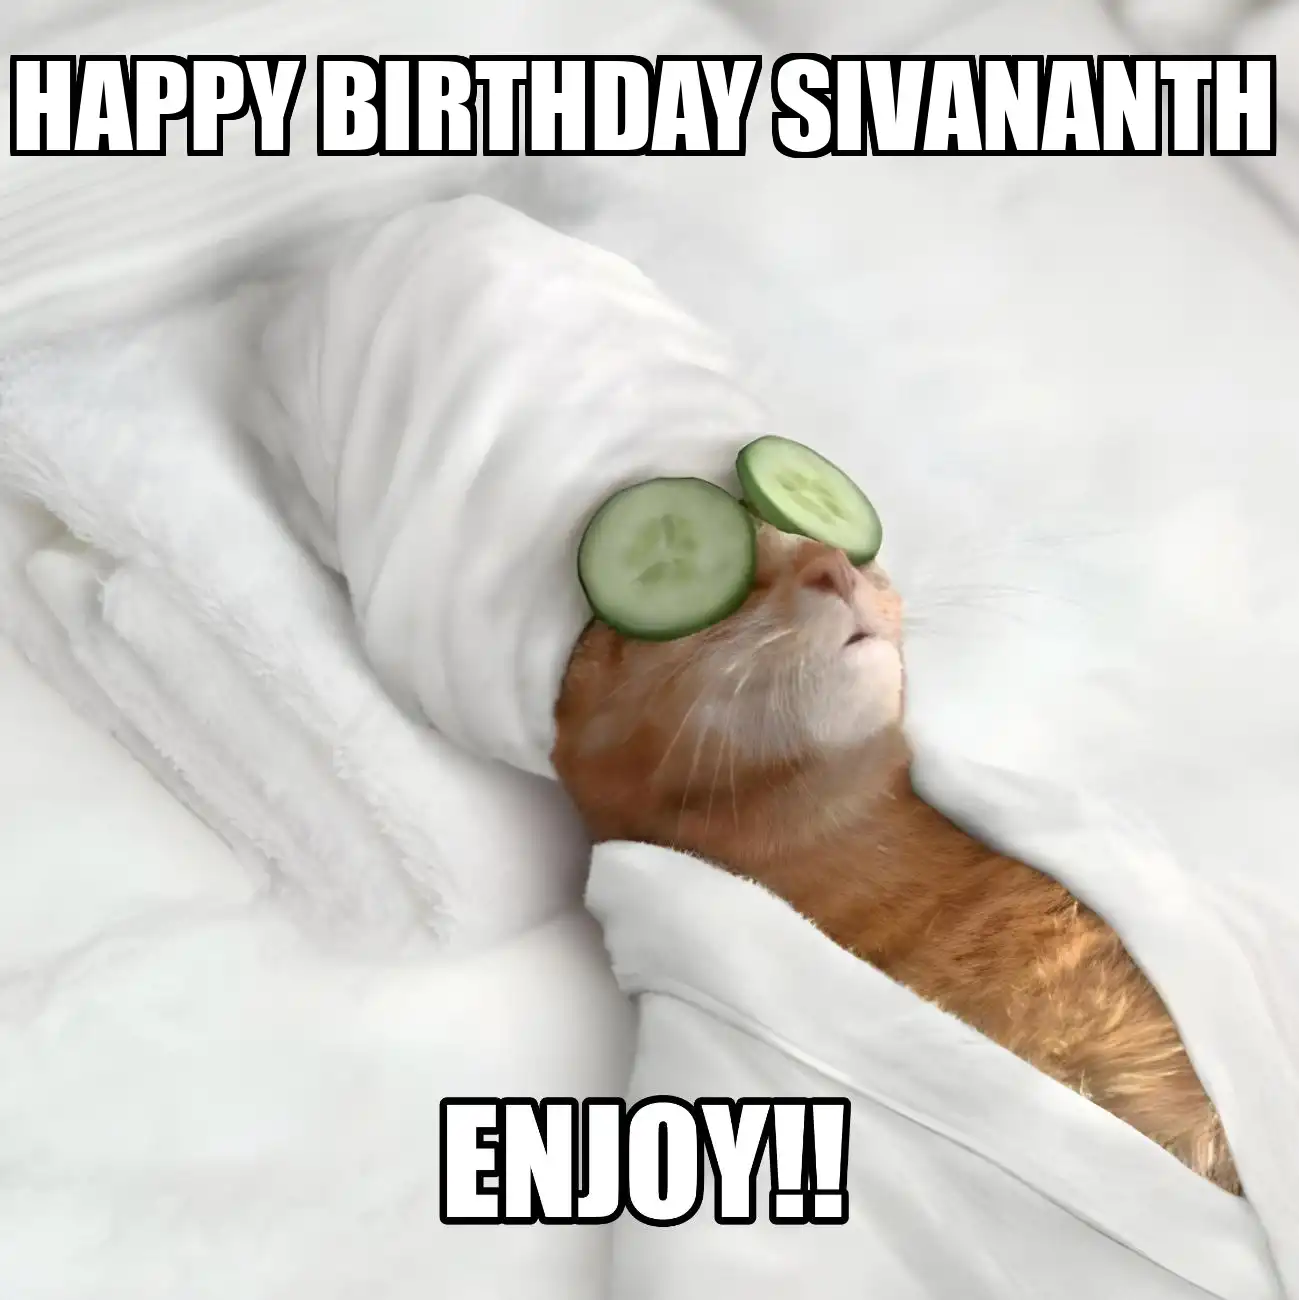 Happy Birthday Sivananth Enjoy Cat Meme